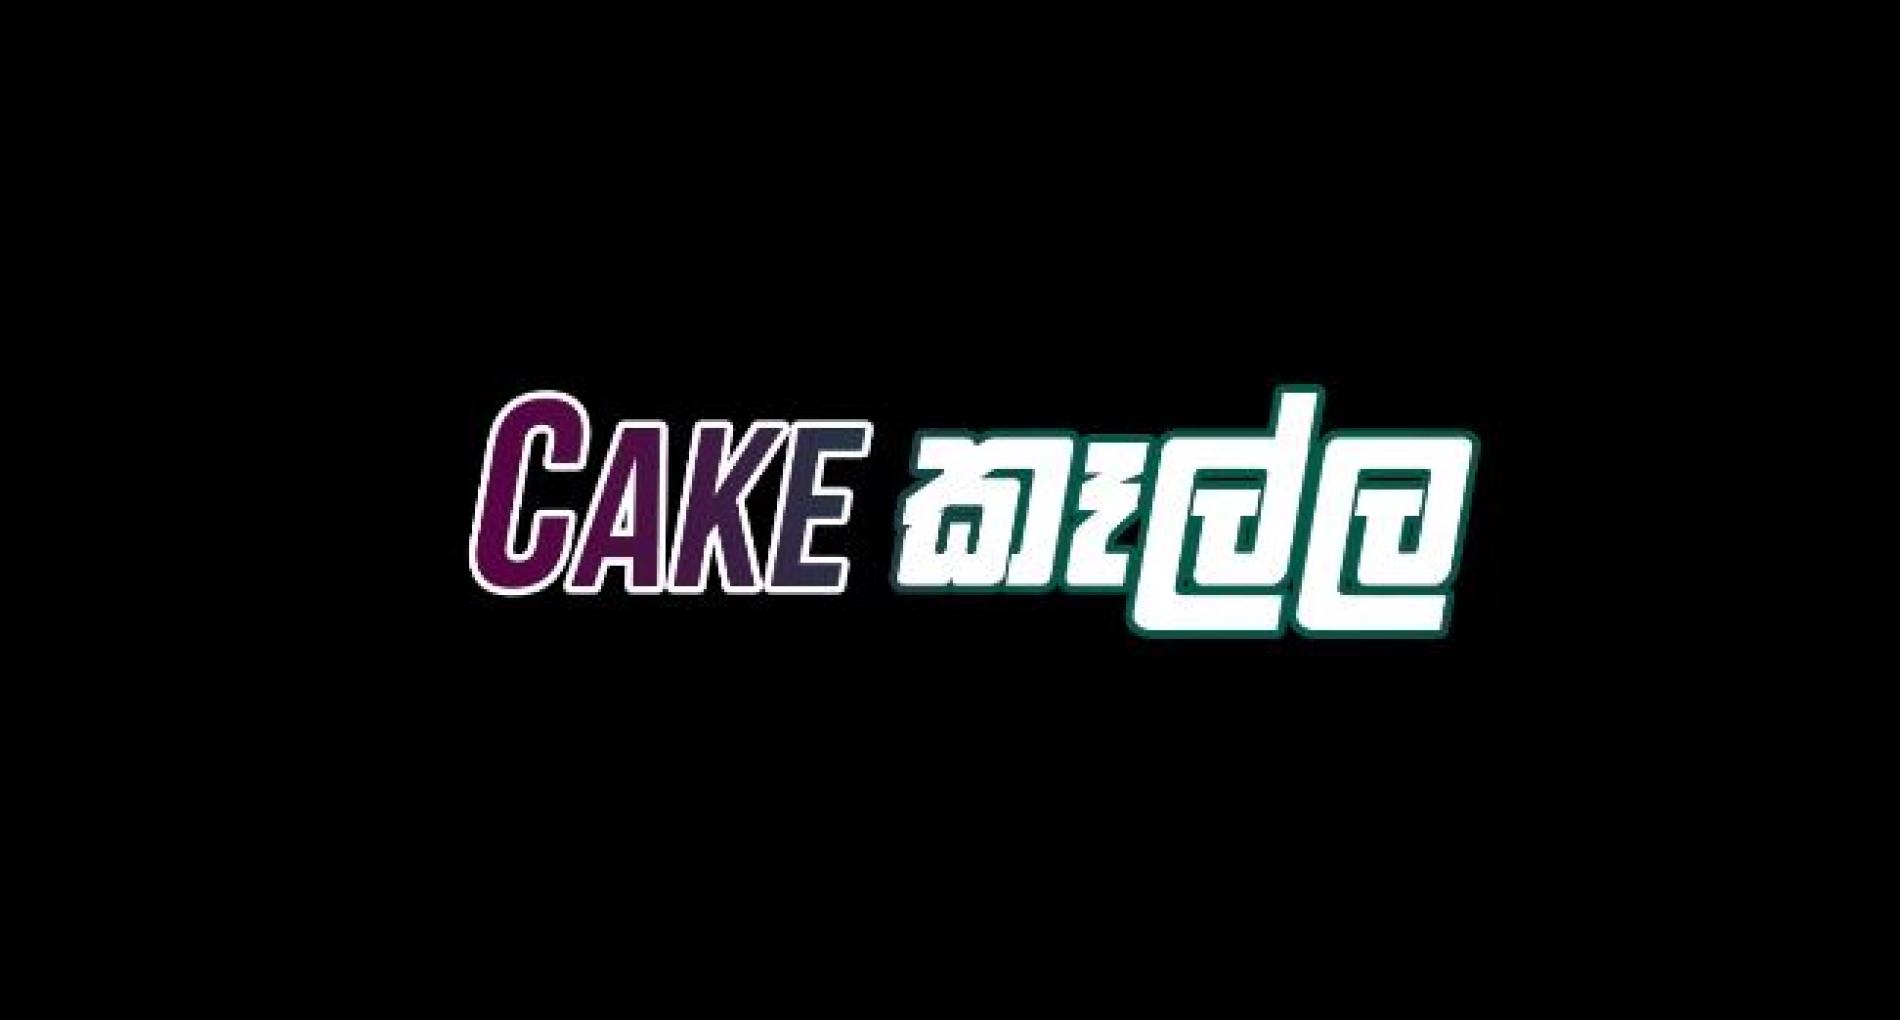 News: Cake කෑල්ල | A Skit by the High School Junkies